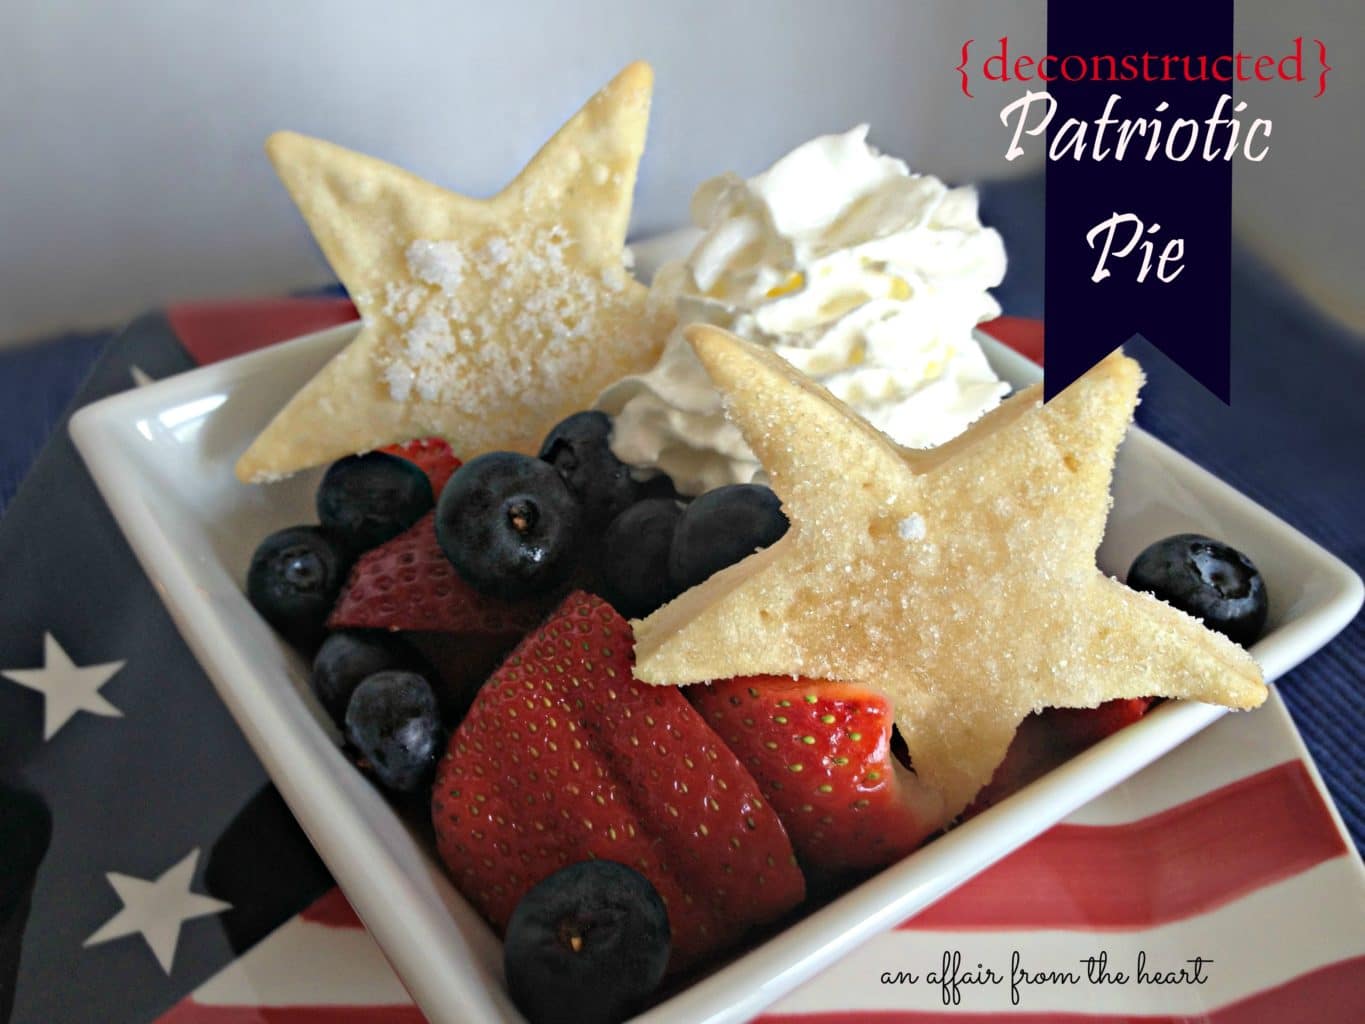 deconstructed patriotic pie